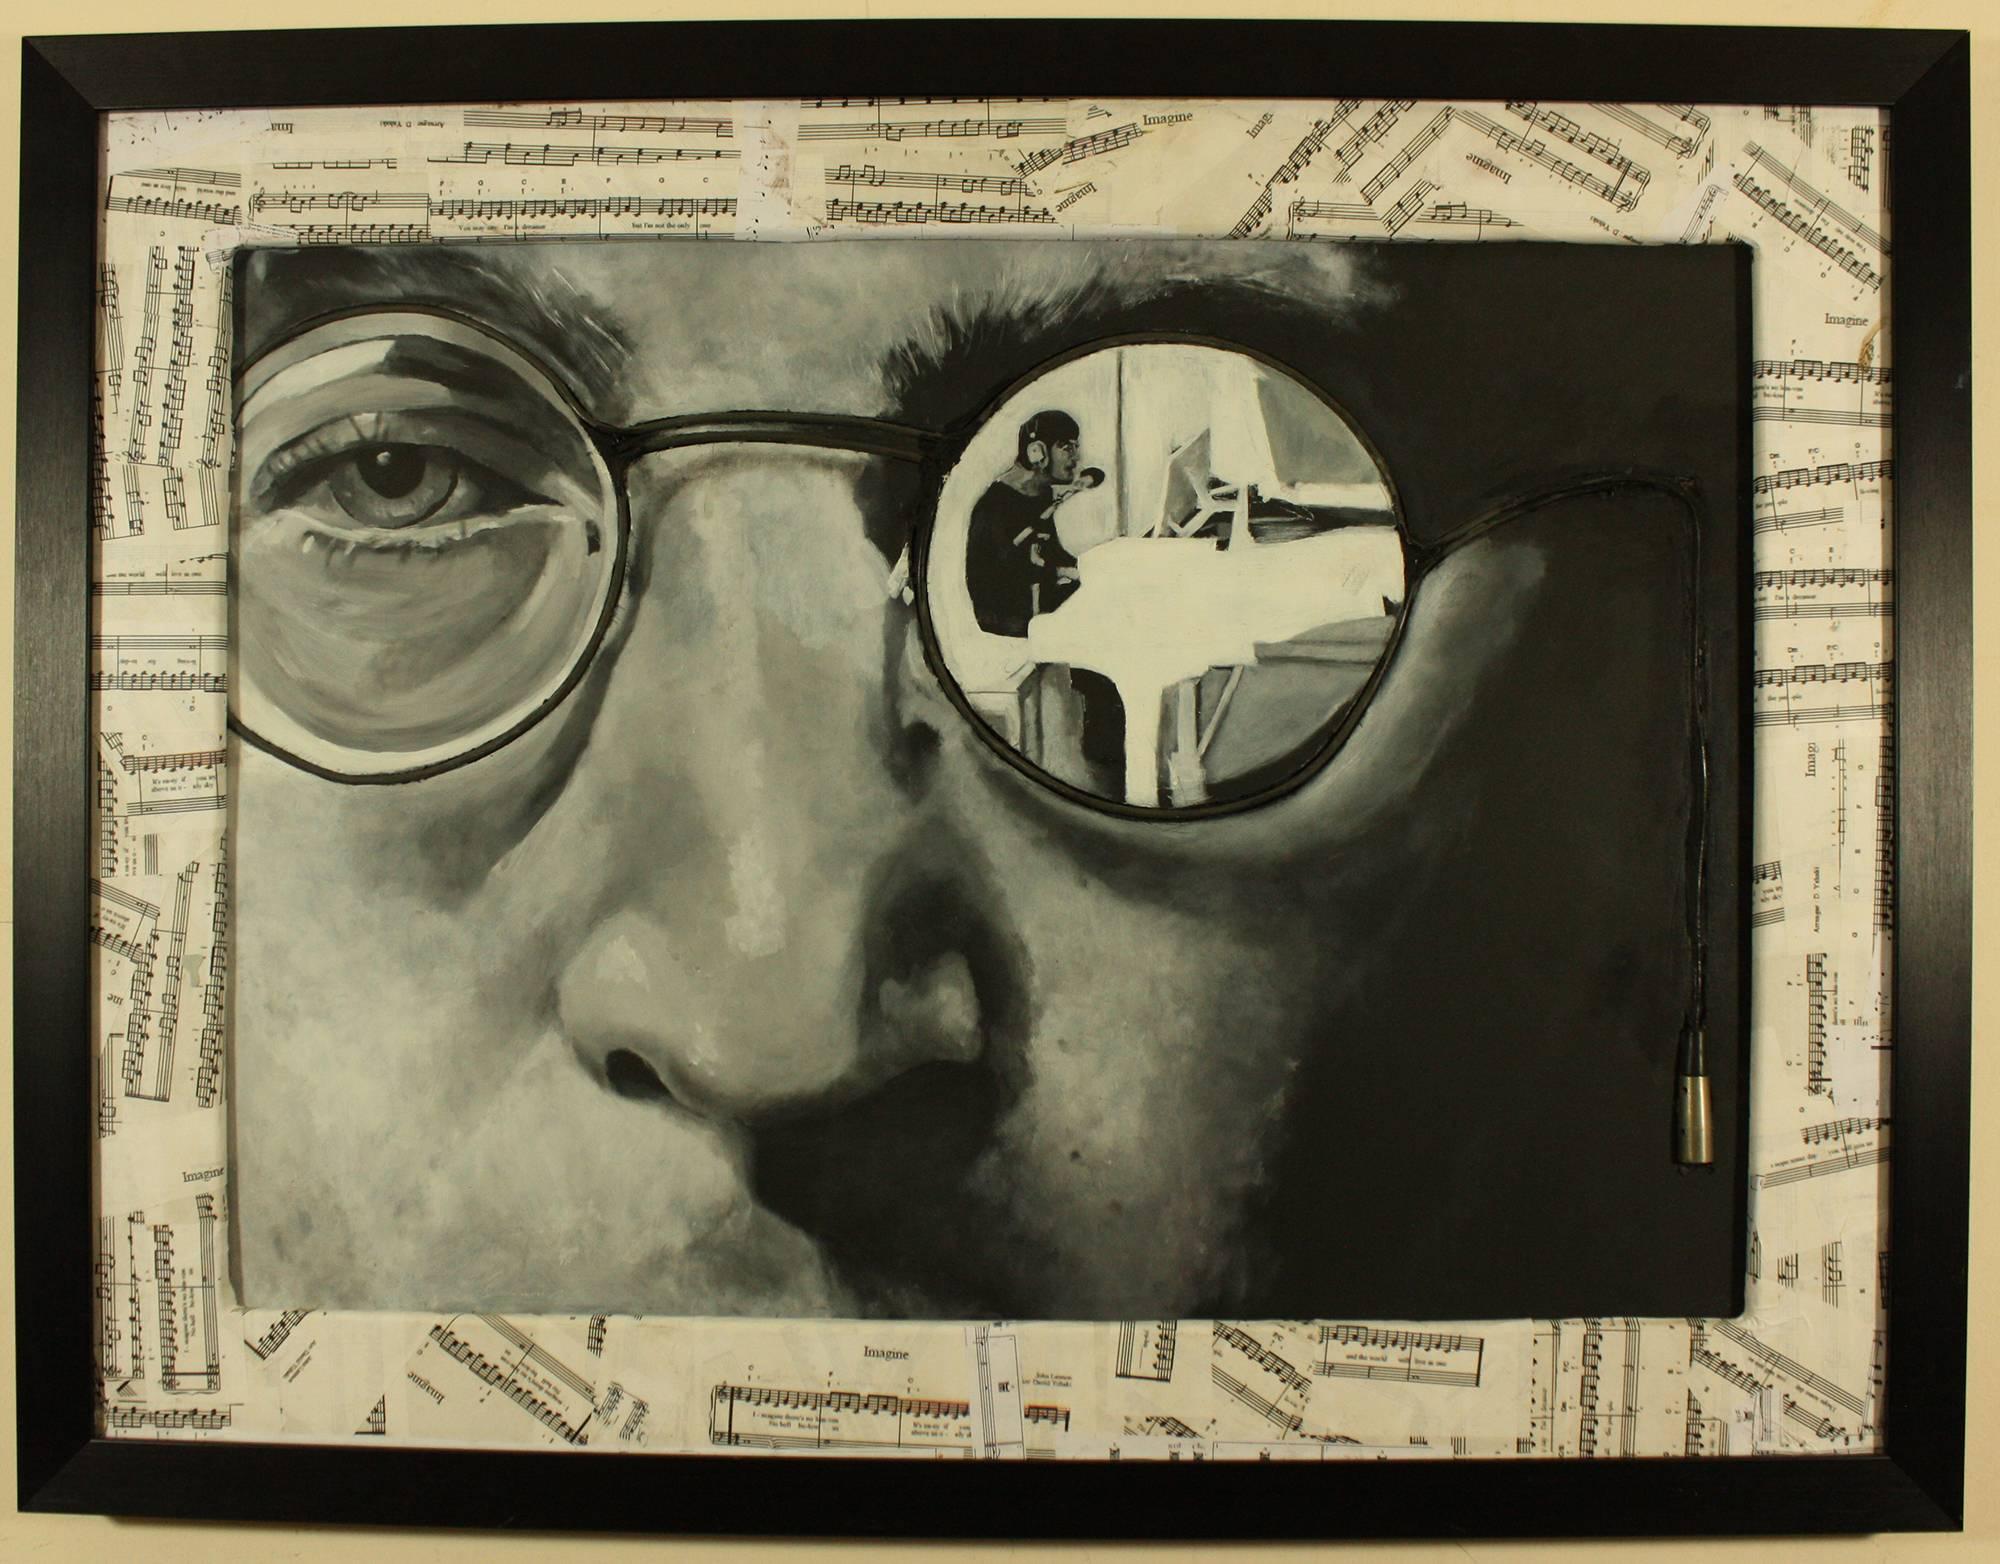 John Lennon "Wired" - Mixed Media Art by James Wilkinson